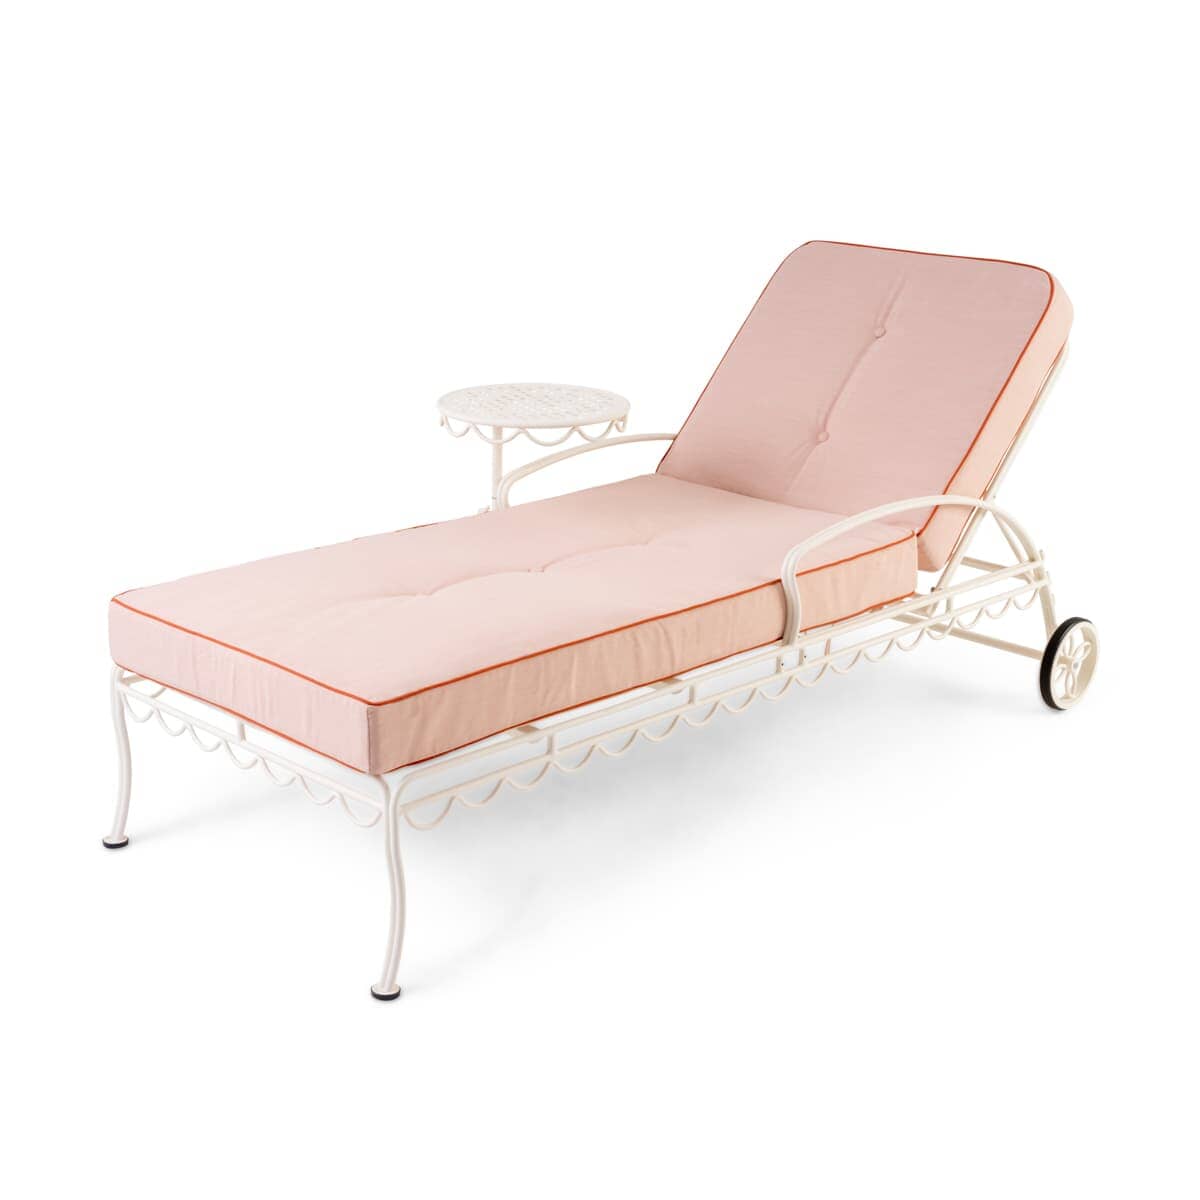 Studio image of rivera pink sun lounger cushion